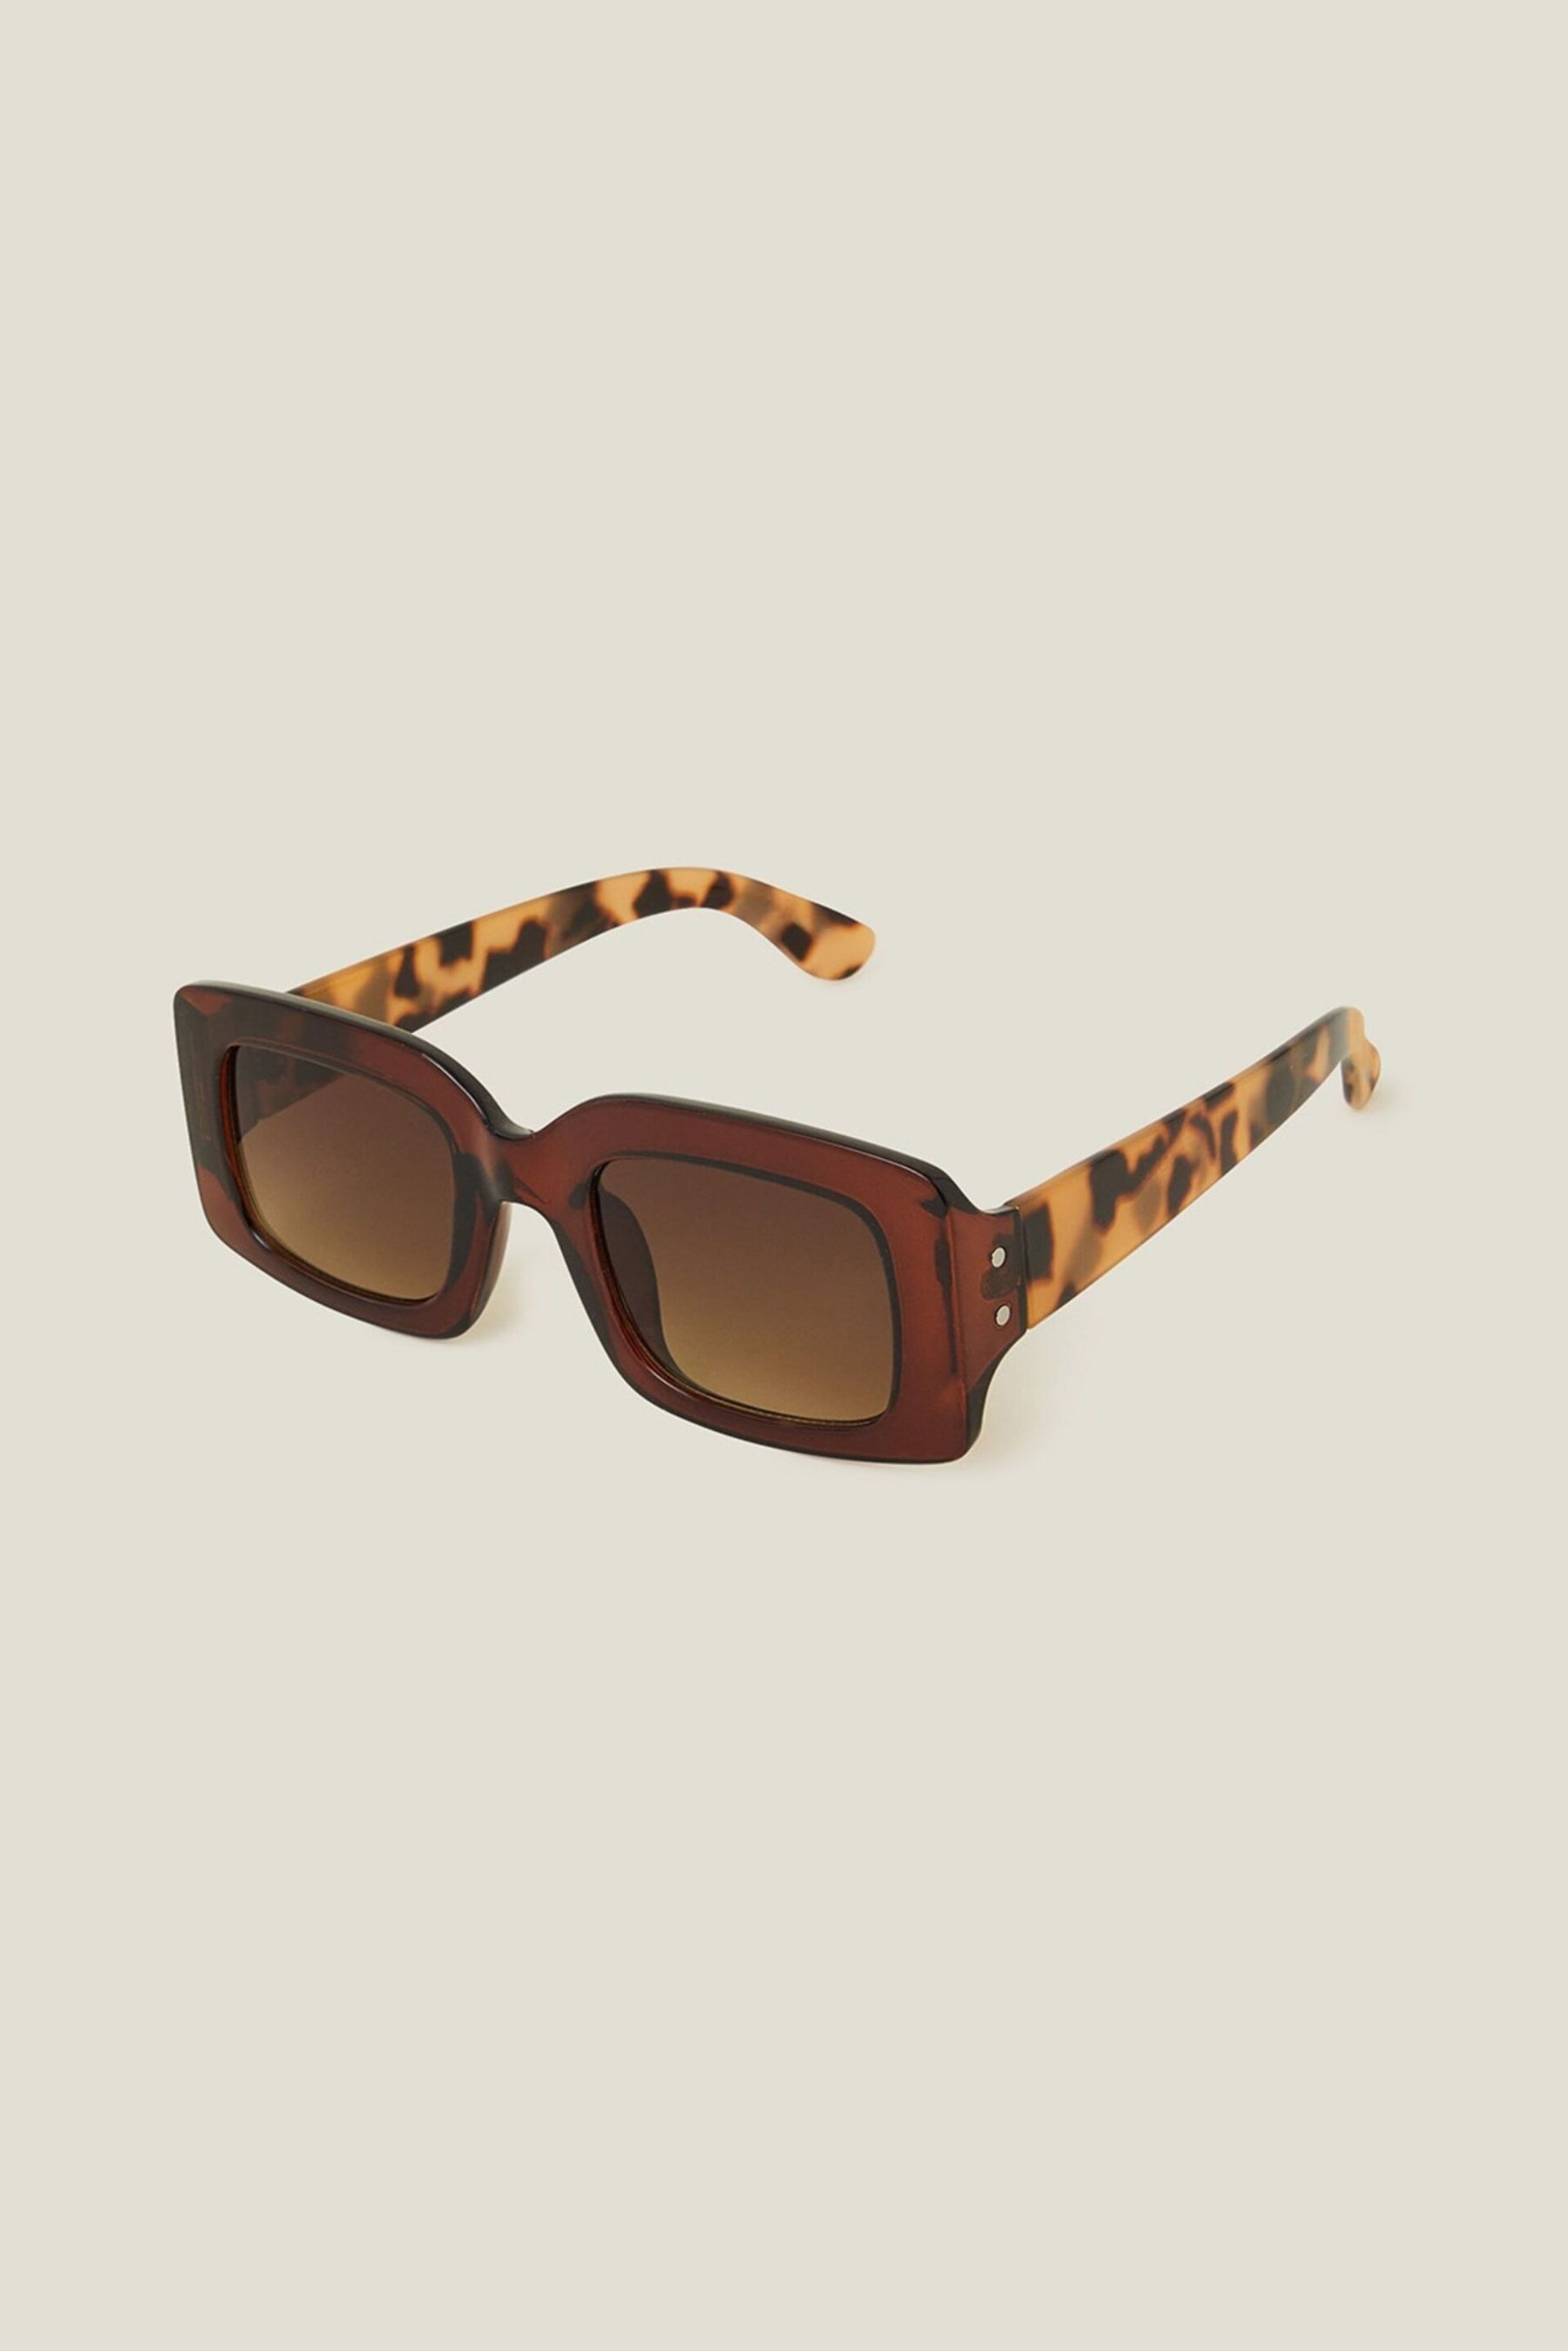 Accessorize Yellow Square Tortoiseshell Contrast Sunglasses - Image 1 of 3